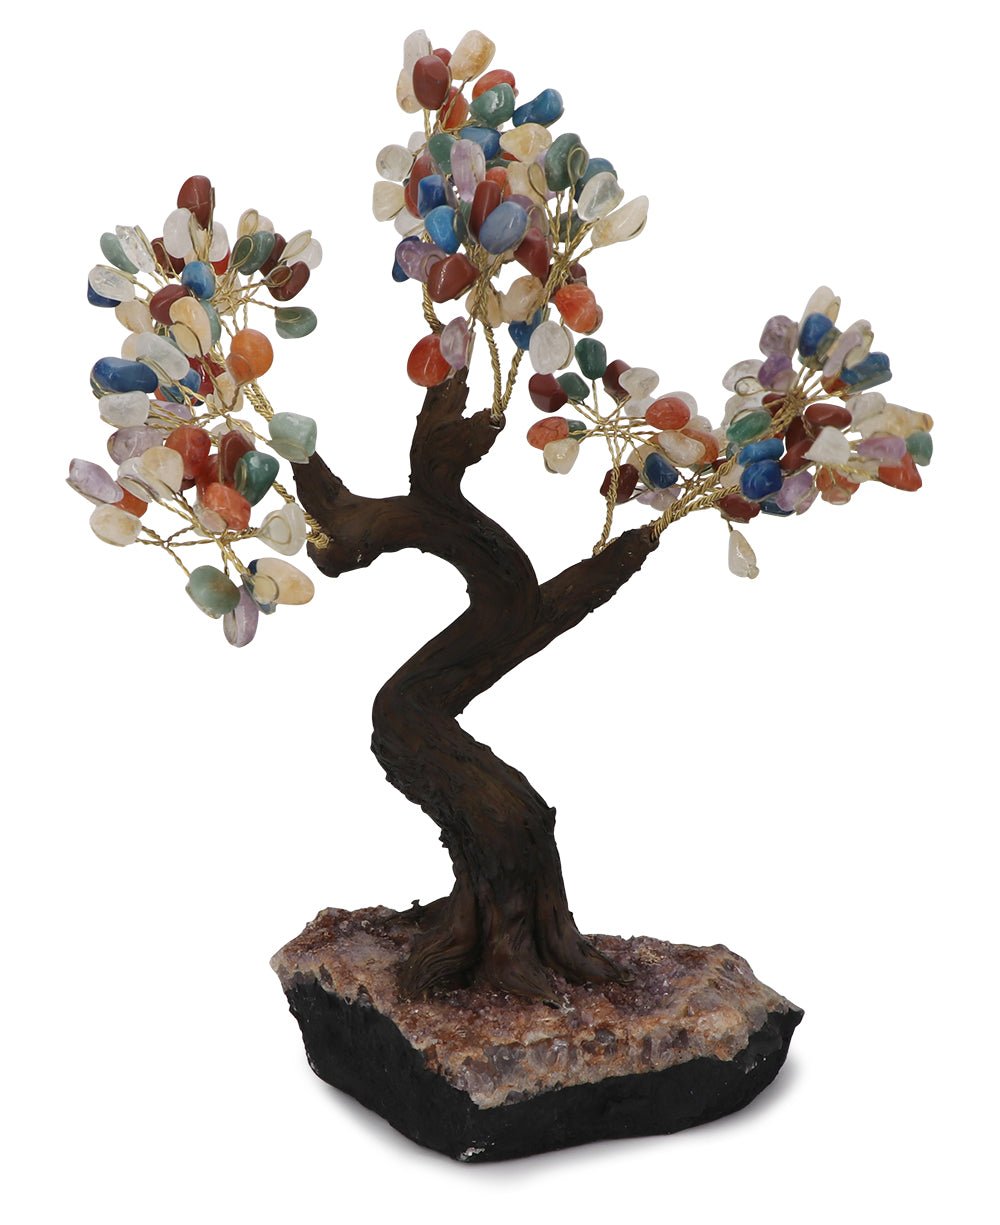 Premium Multicolored Rainbow Gemstone Bonsai Tree, 180 Stones - Decor